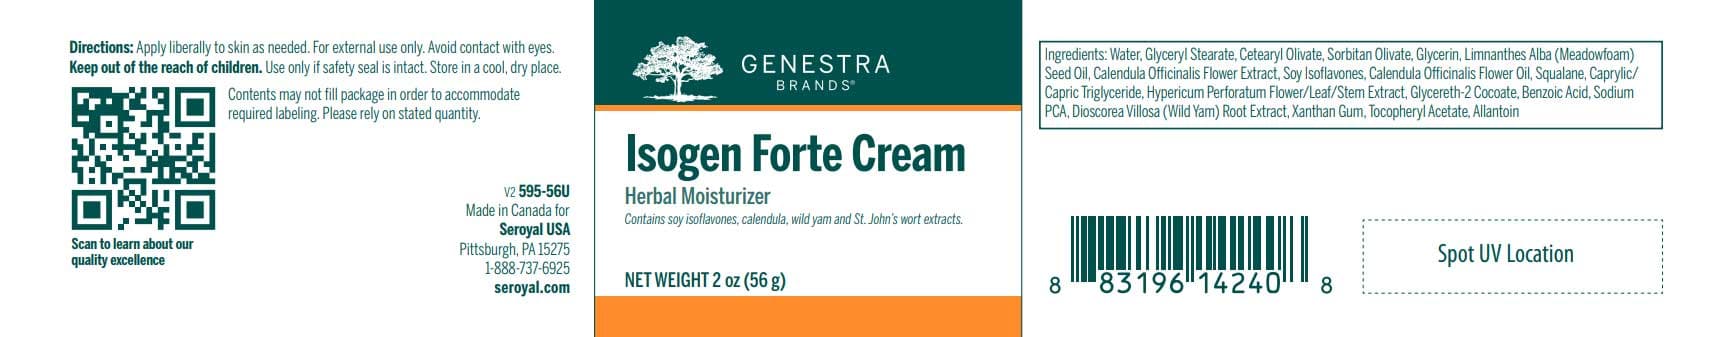 Genestra Brands Isogen Forte Cream Label